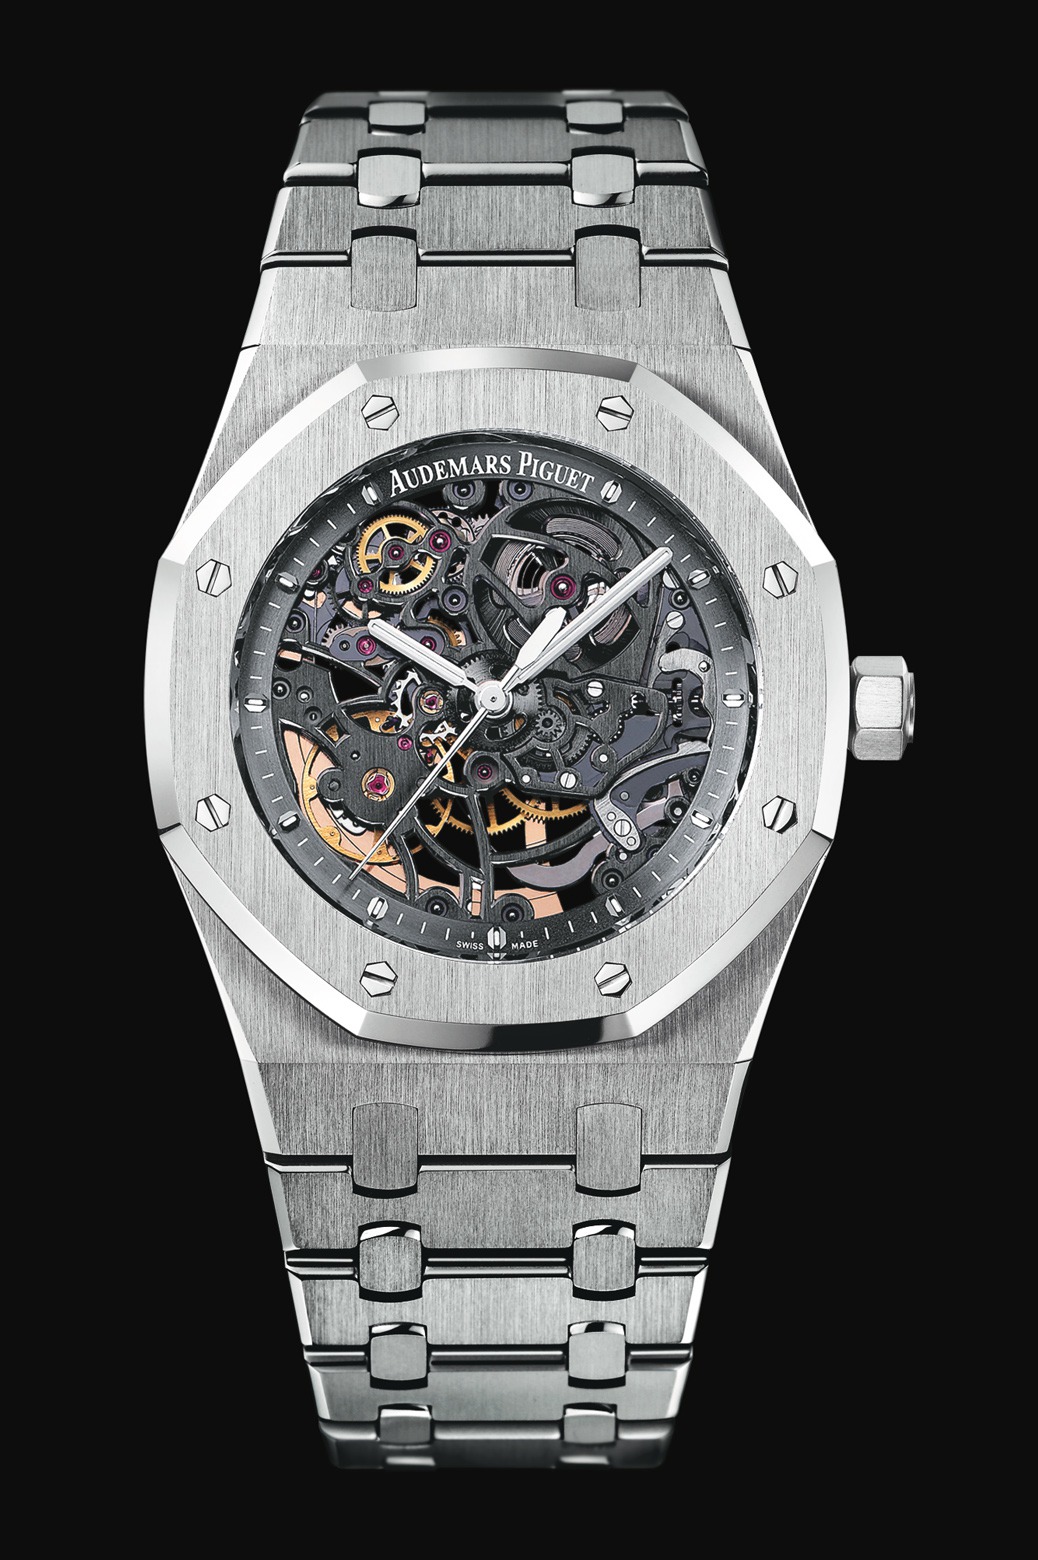 Audemars Piguet Royal Oak Openworked Self-Winding Steel watch REF: 15305ST.OO.1220ST.01